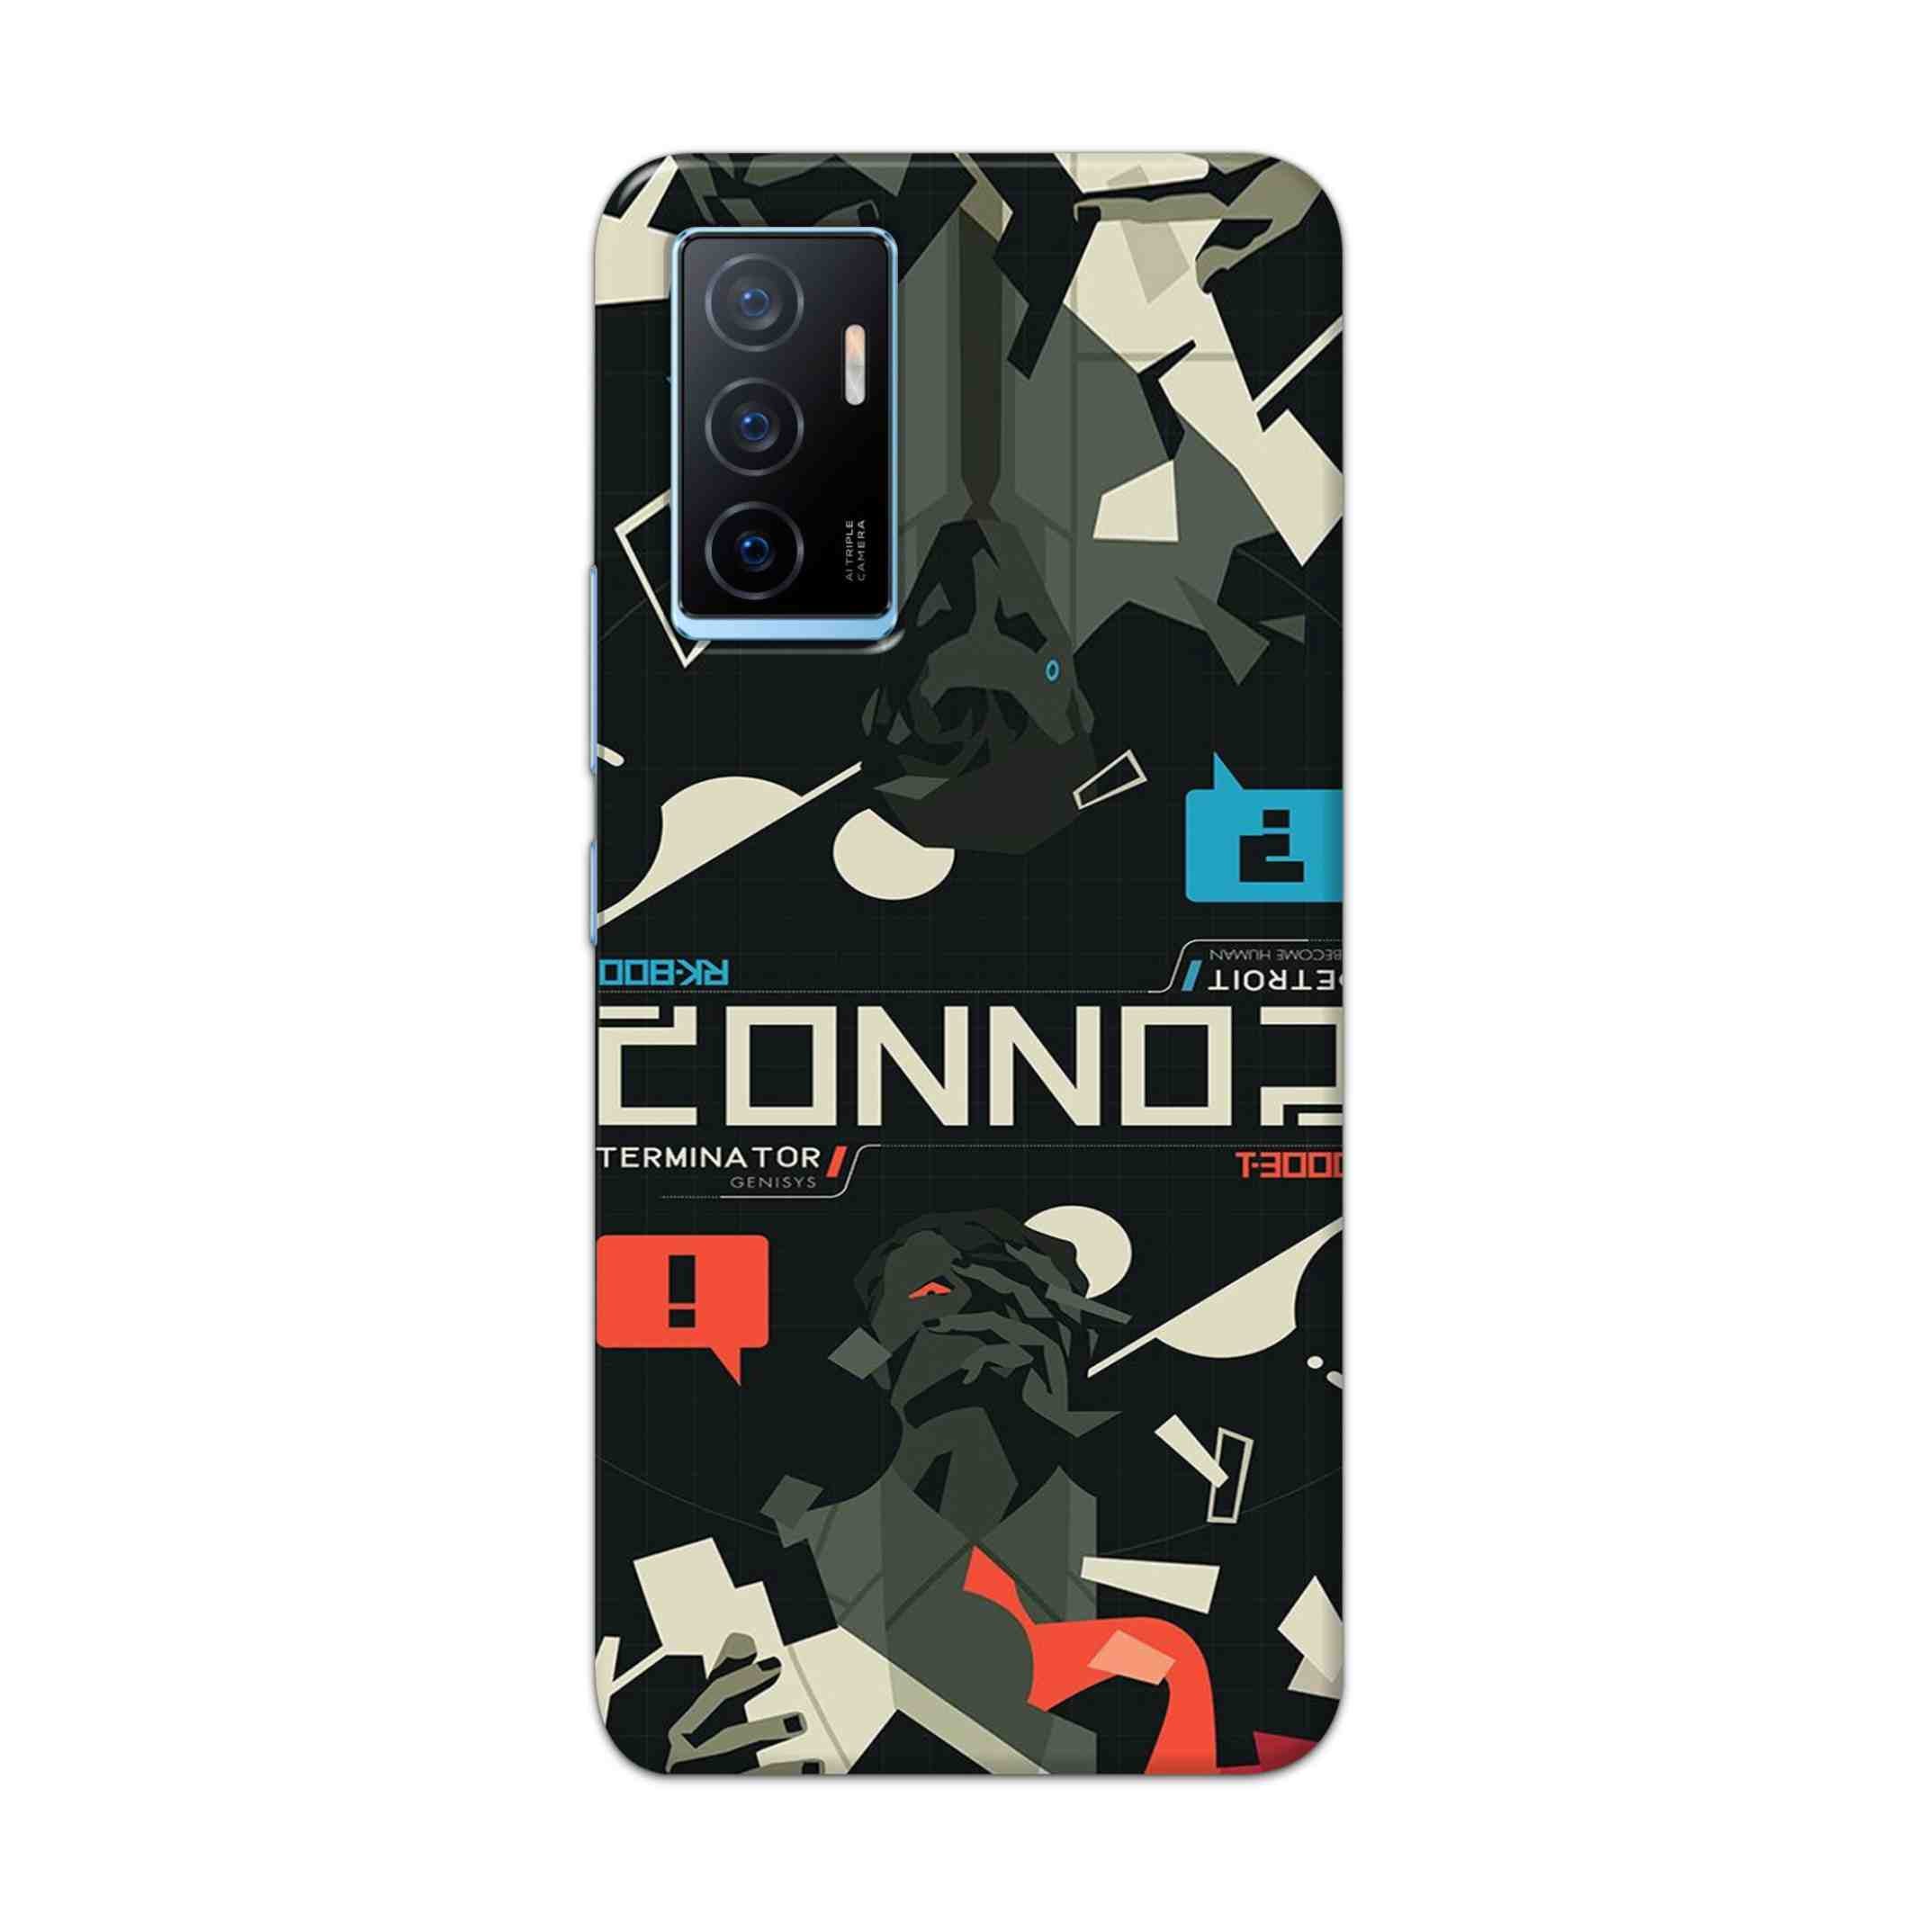 Buy Terminator Hard Back Mobile Phone Case Cover For Vivo Y75 4G Online